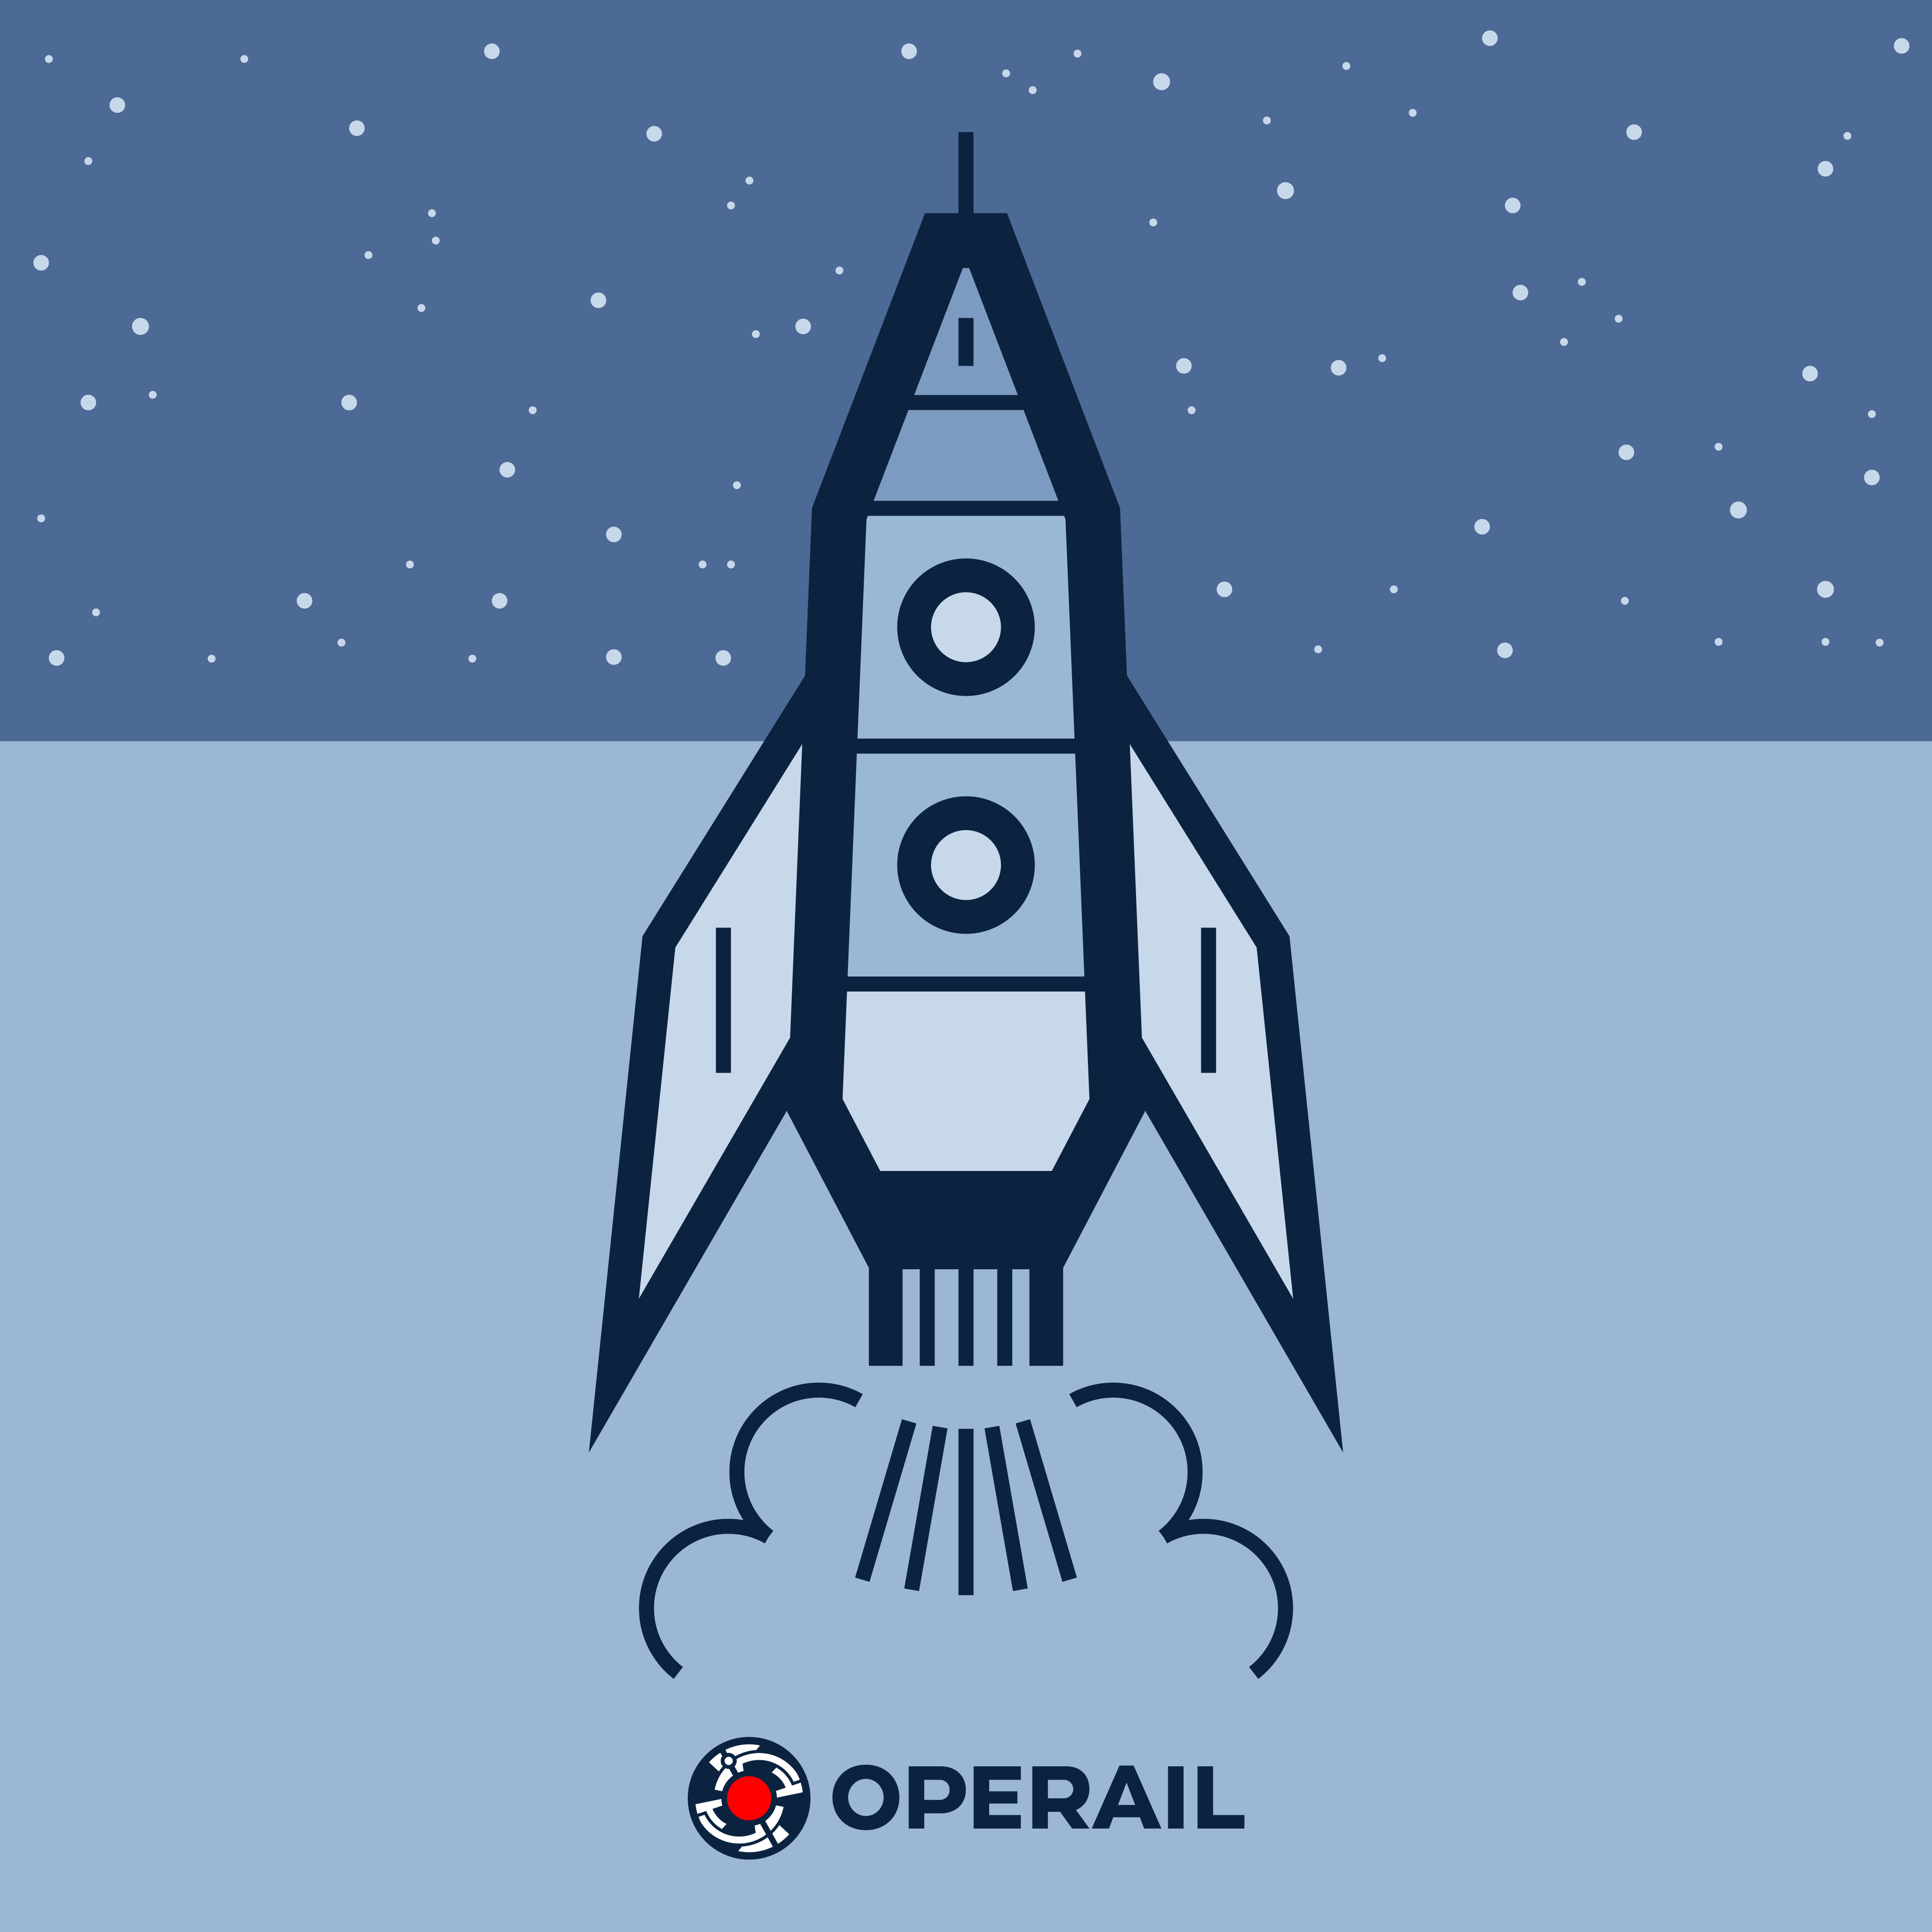 Operail is the fifth most successful company in Estonia!